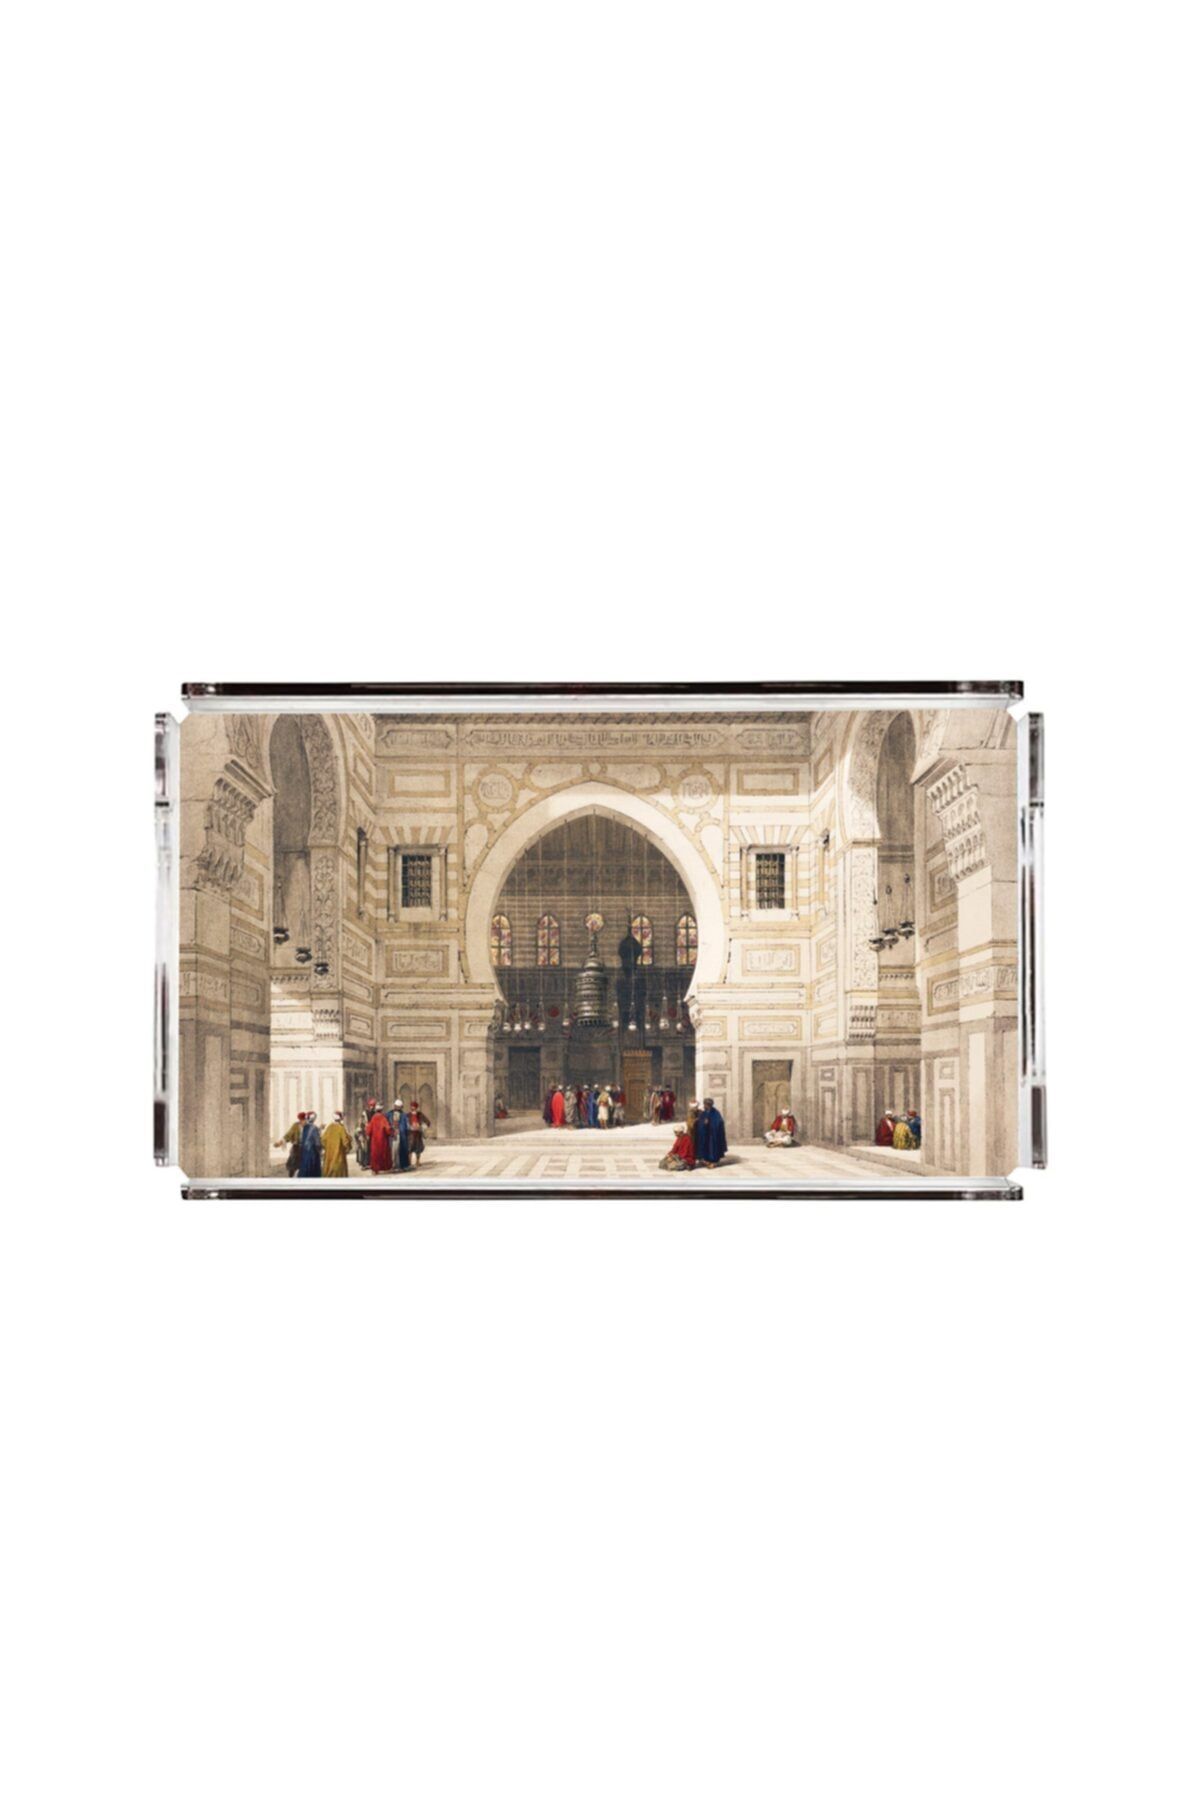 Adawall Ottoman Palace Pleksi Tepsi - Pt2116 - 40x24cm